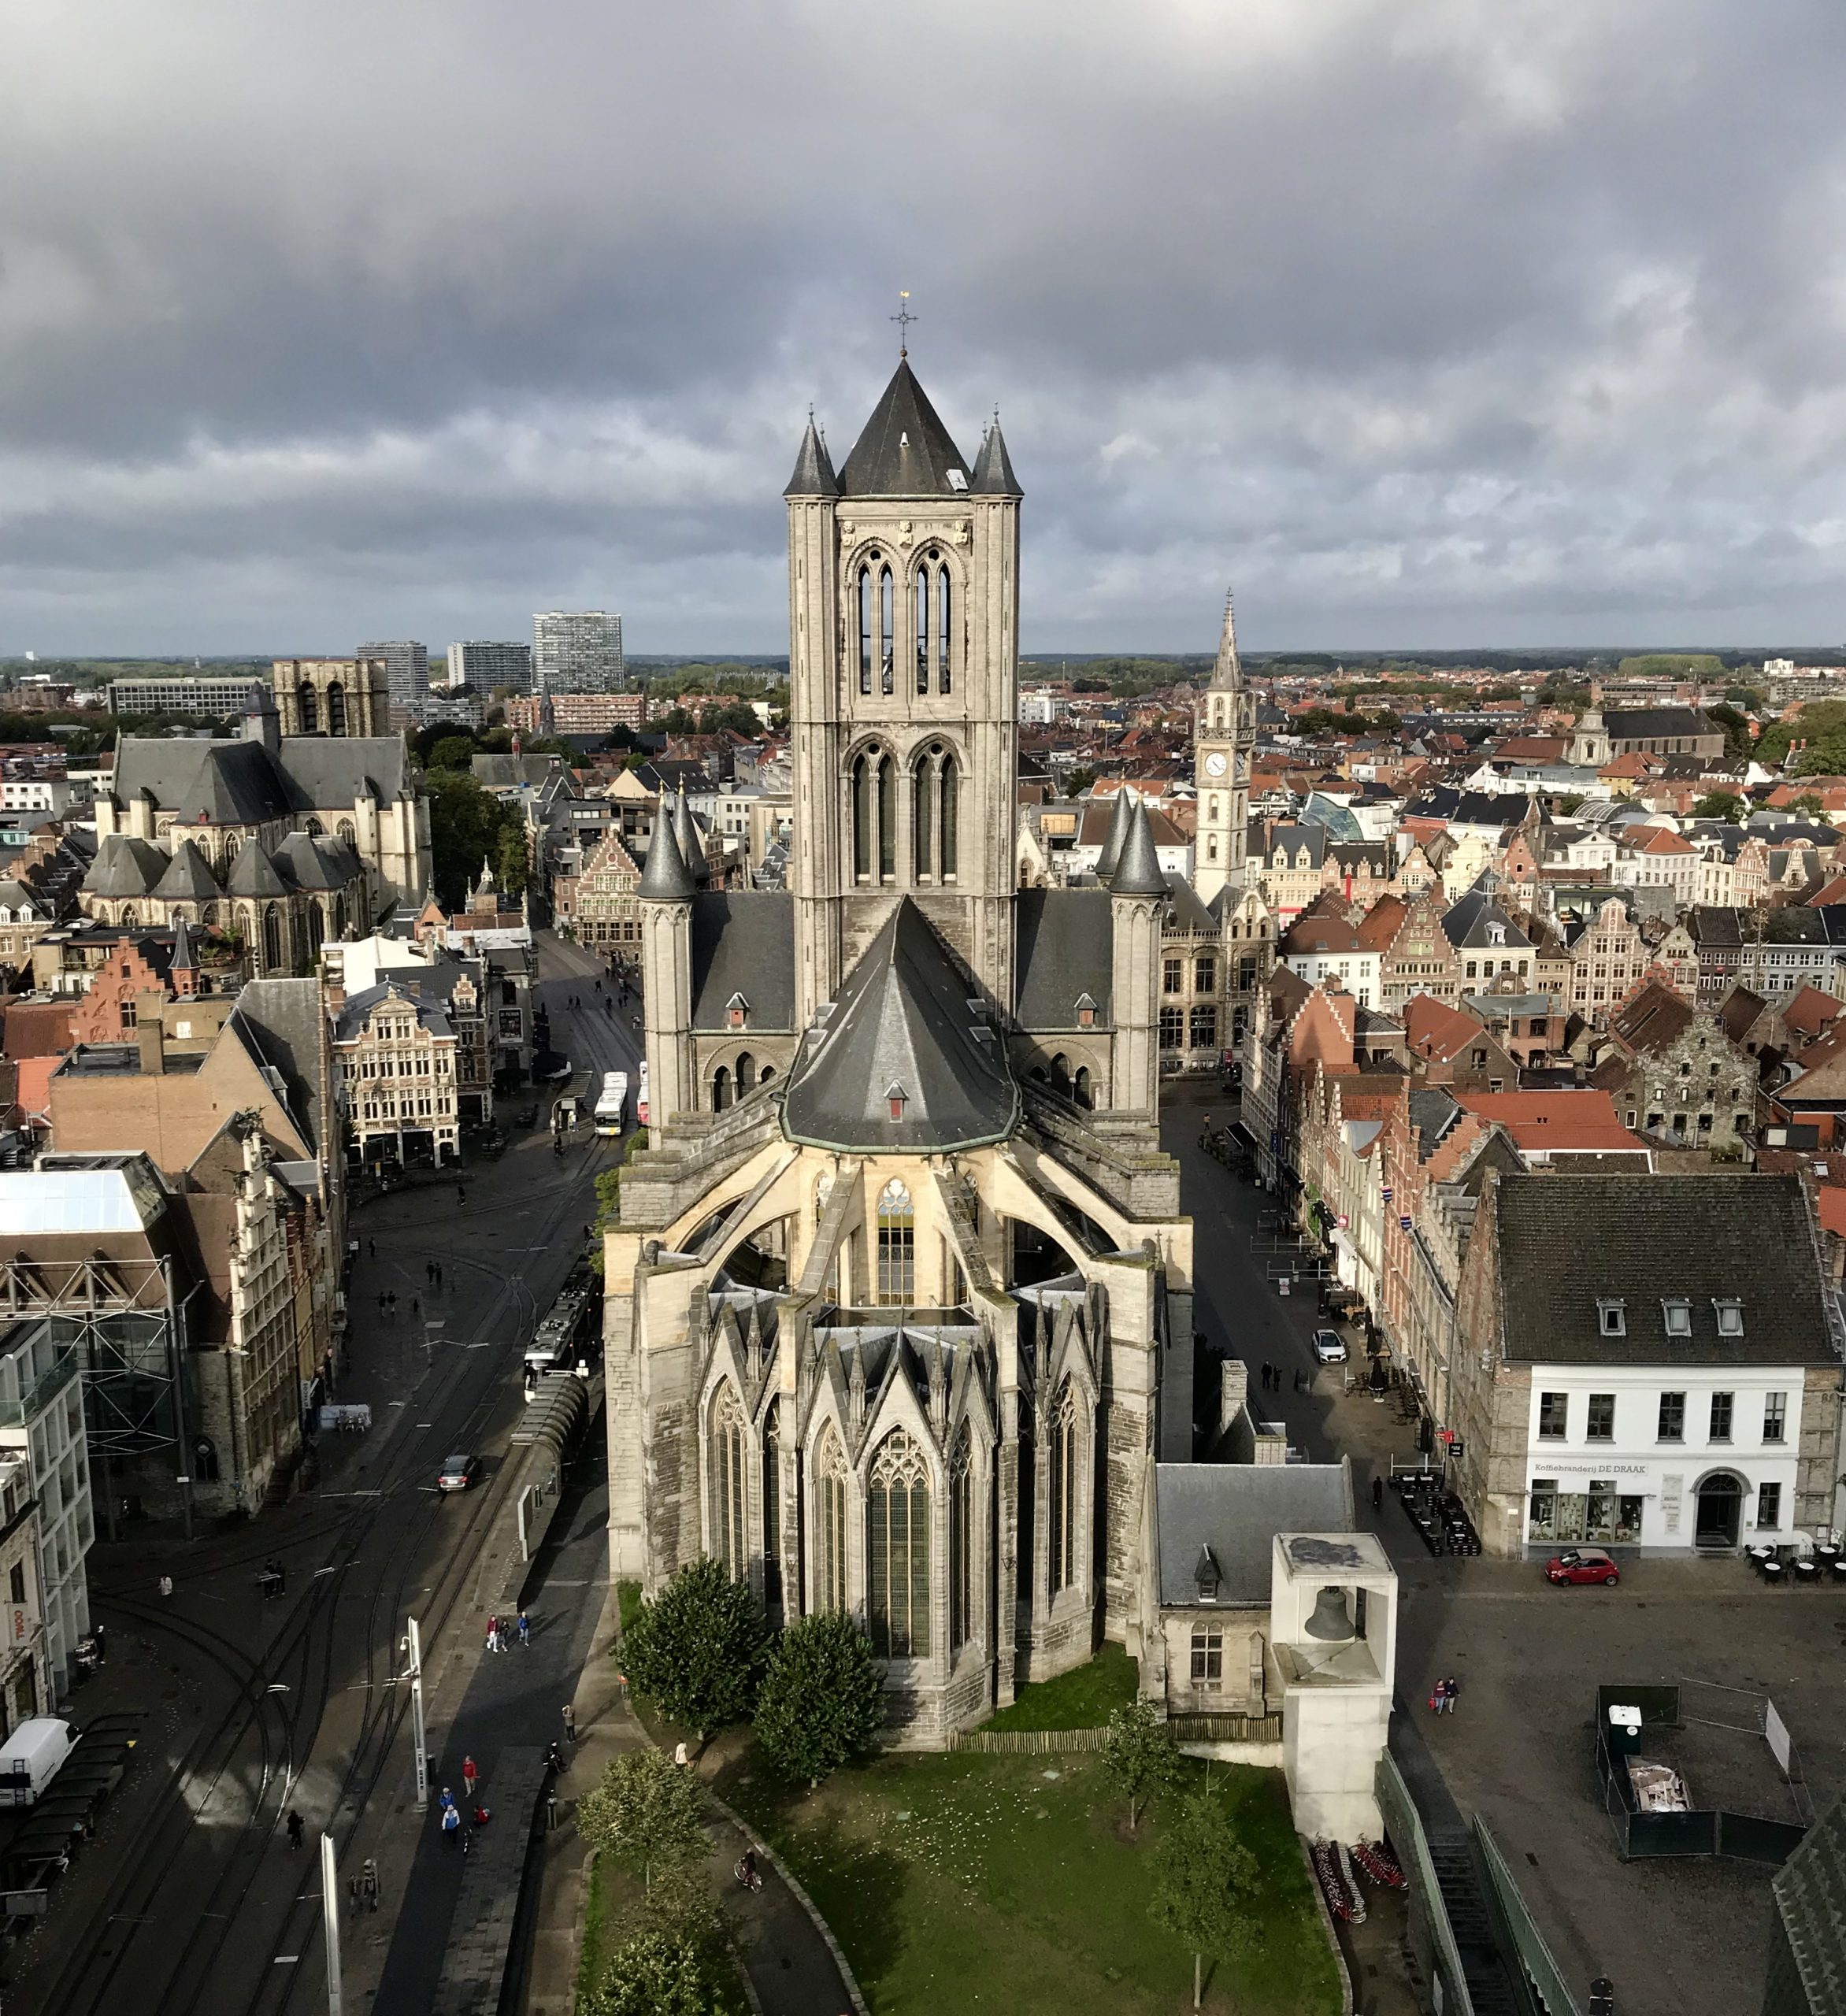 Sint-Niklaaskerk (Saint Nicholas Church) i Gent